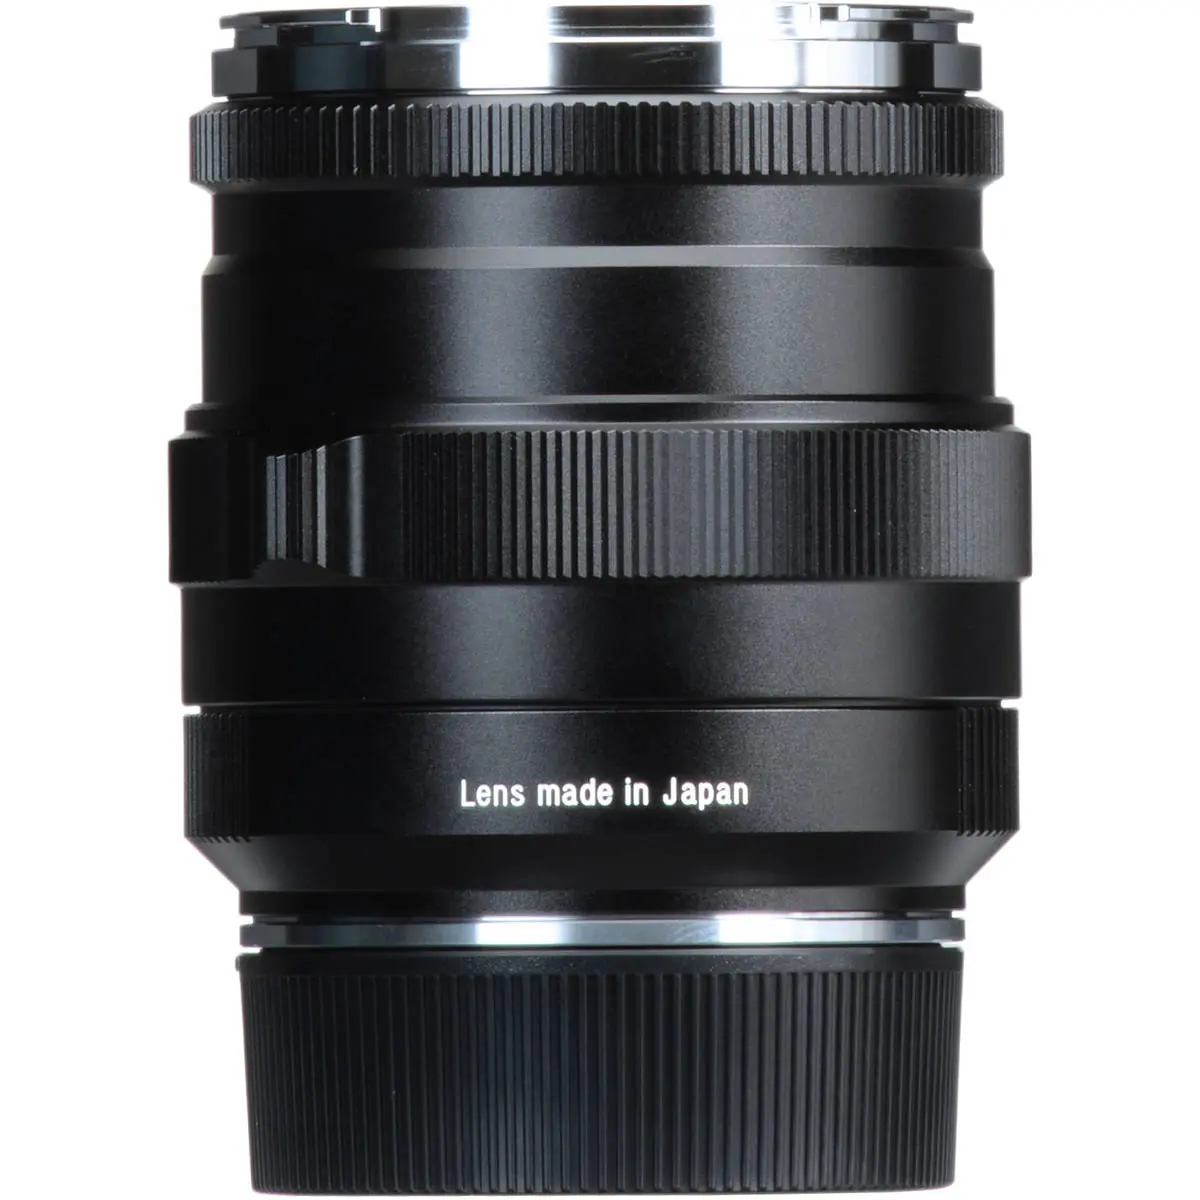 8. Carl Zeiss Distagon T* 35mm f/1.4 ZM Lens (Black) Lens